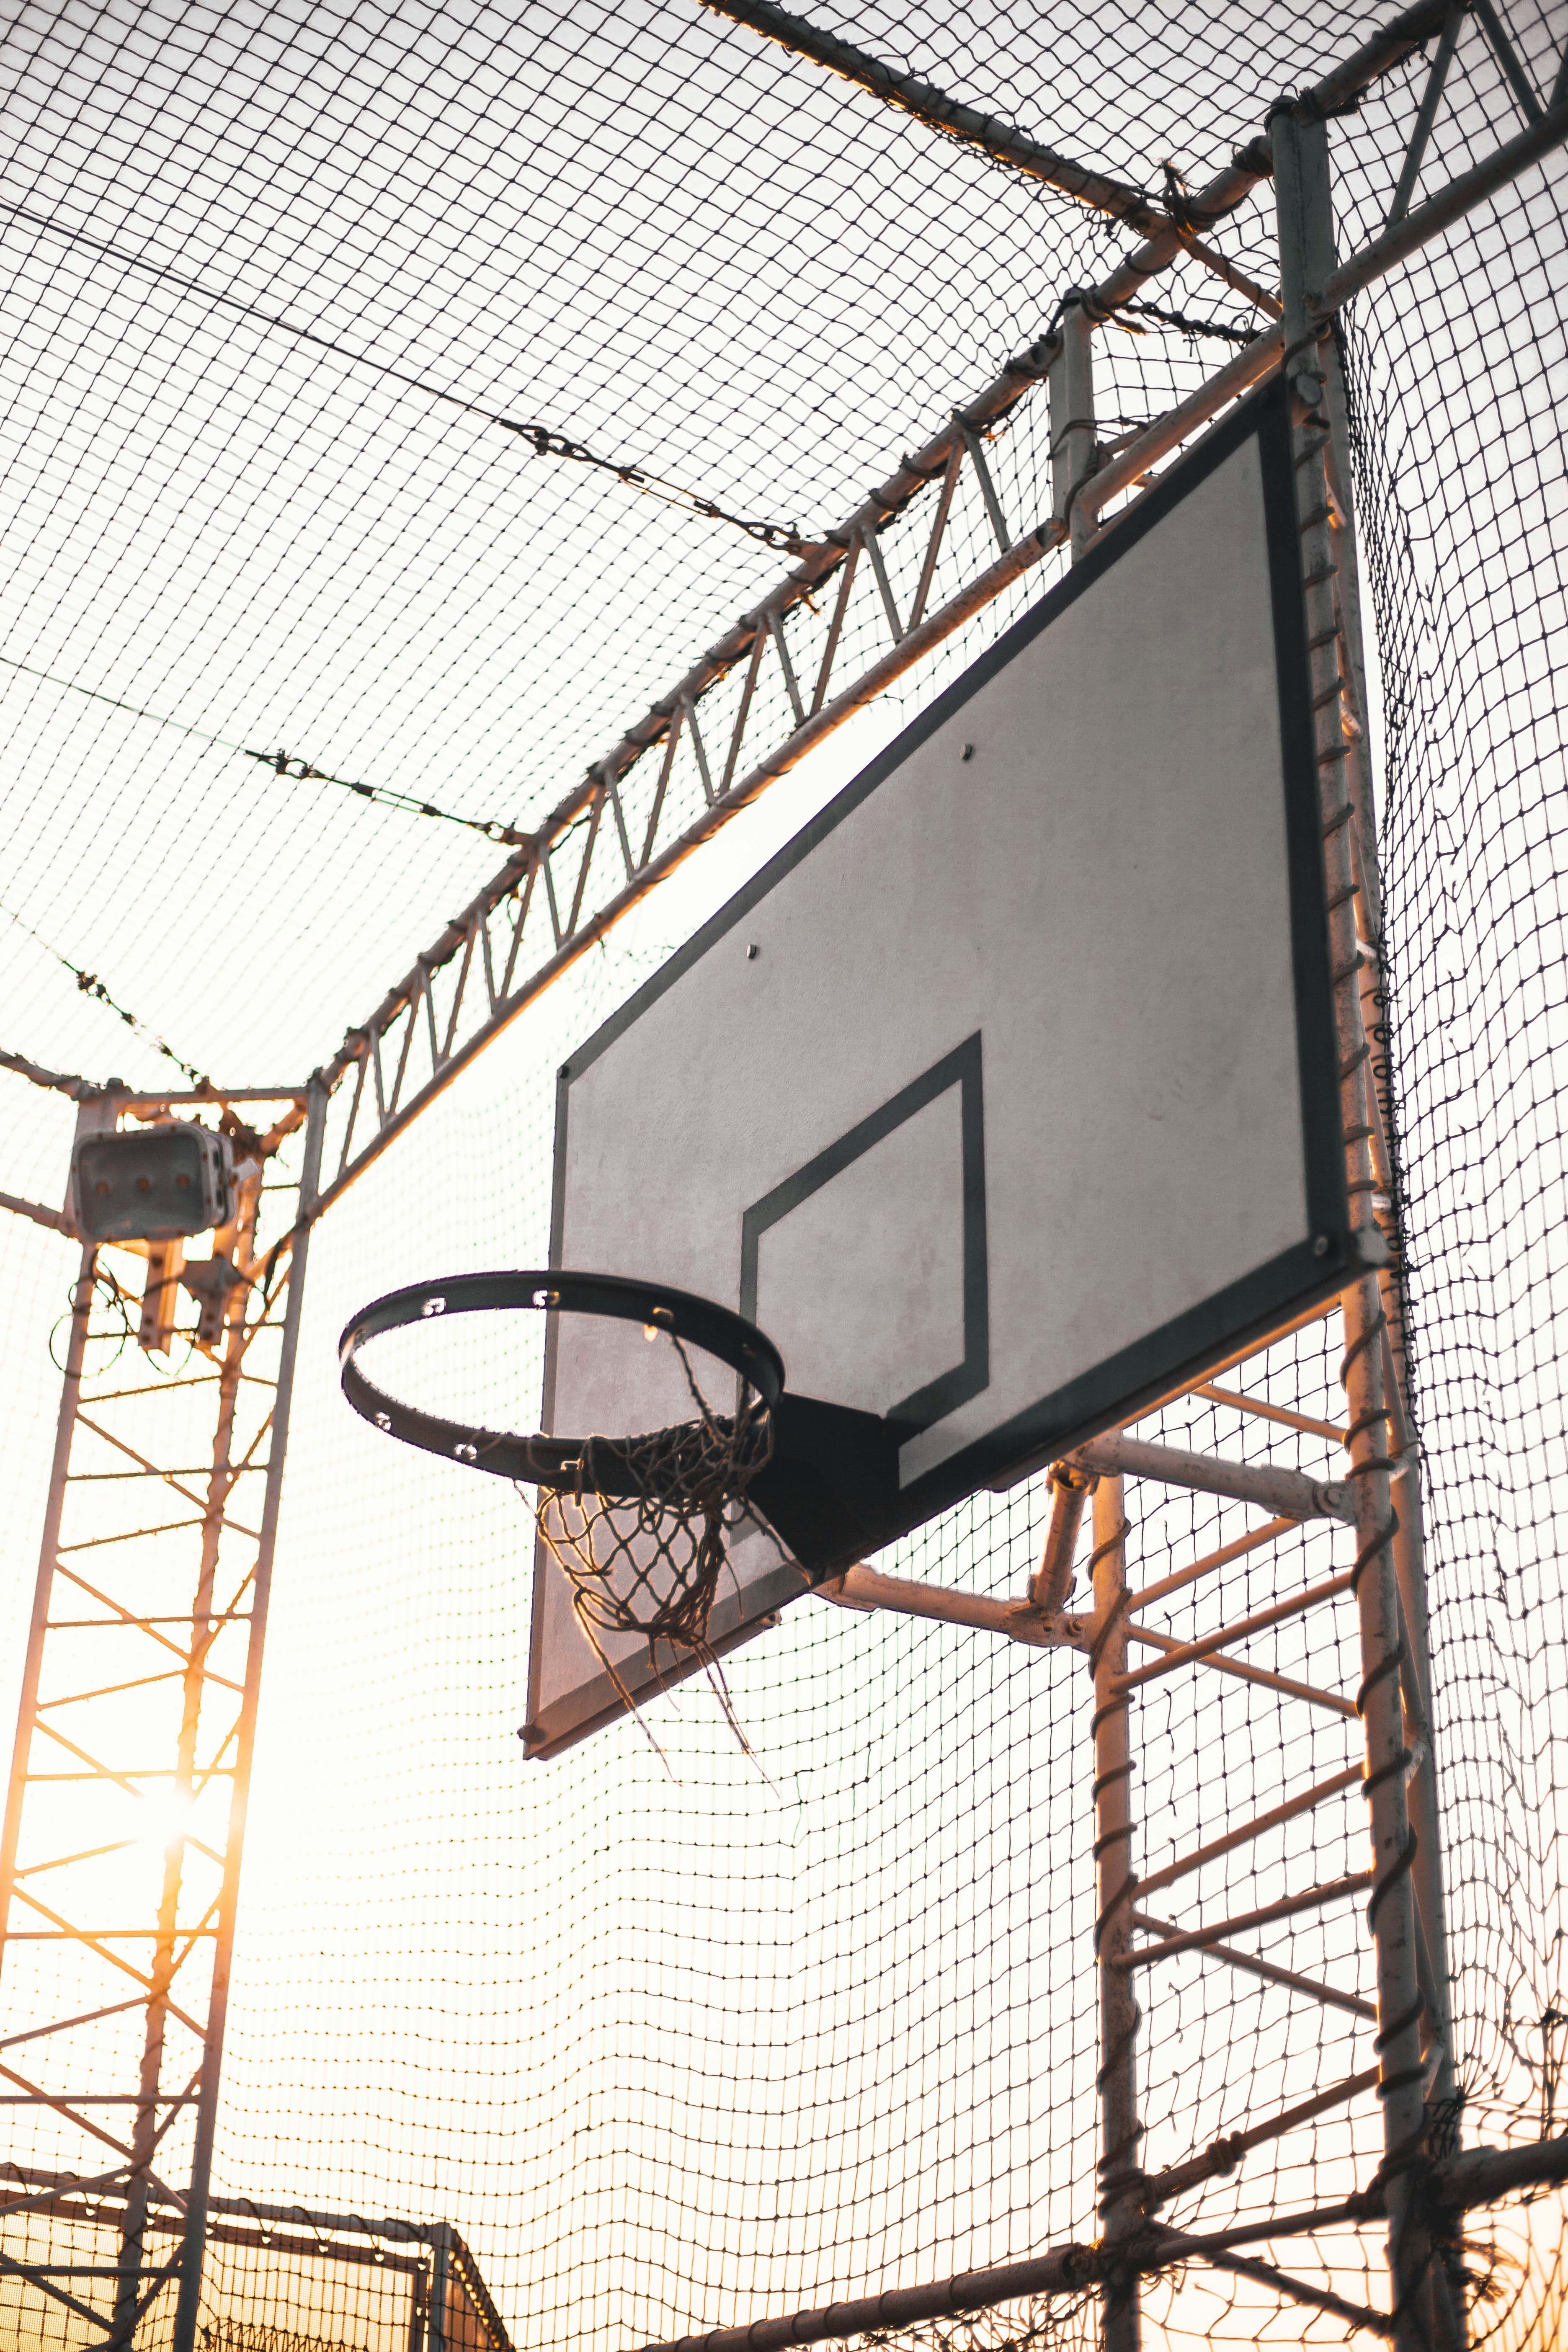 grey basketball system inside net covered court